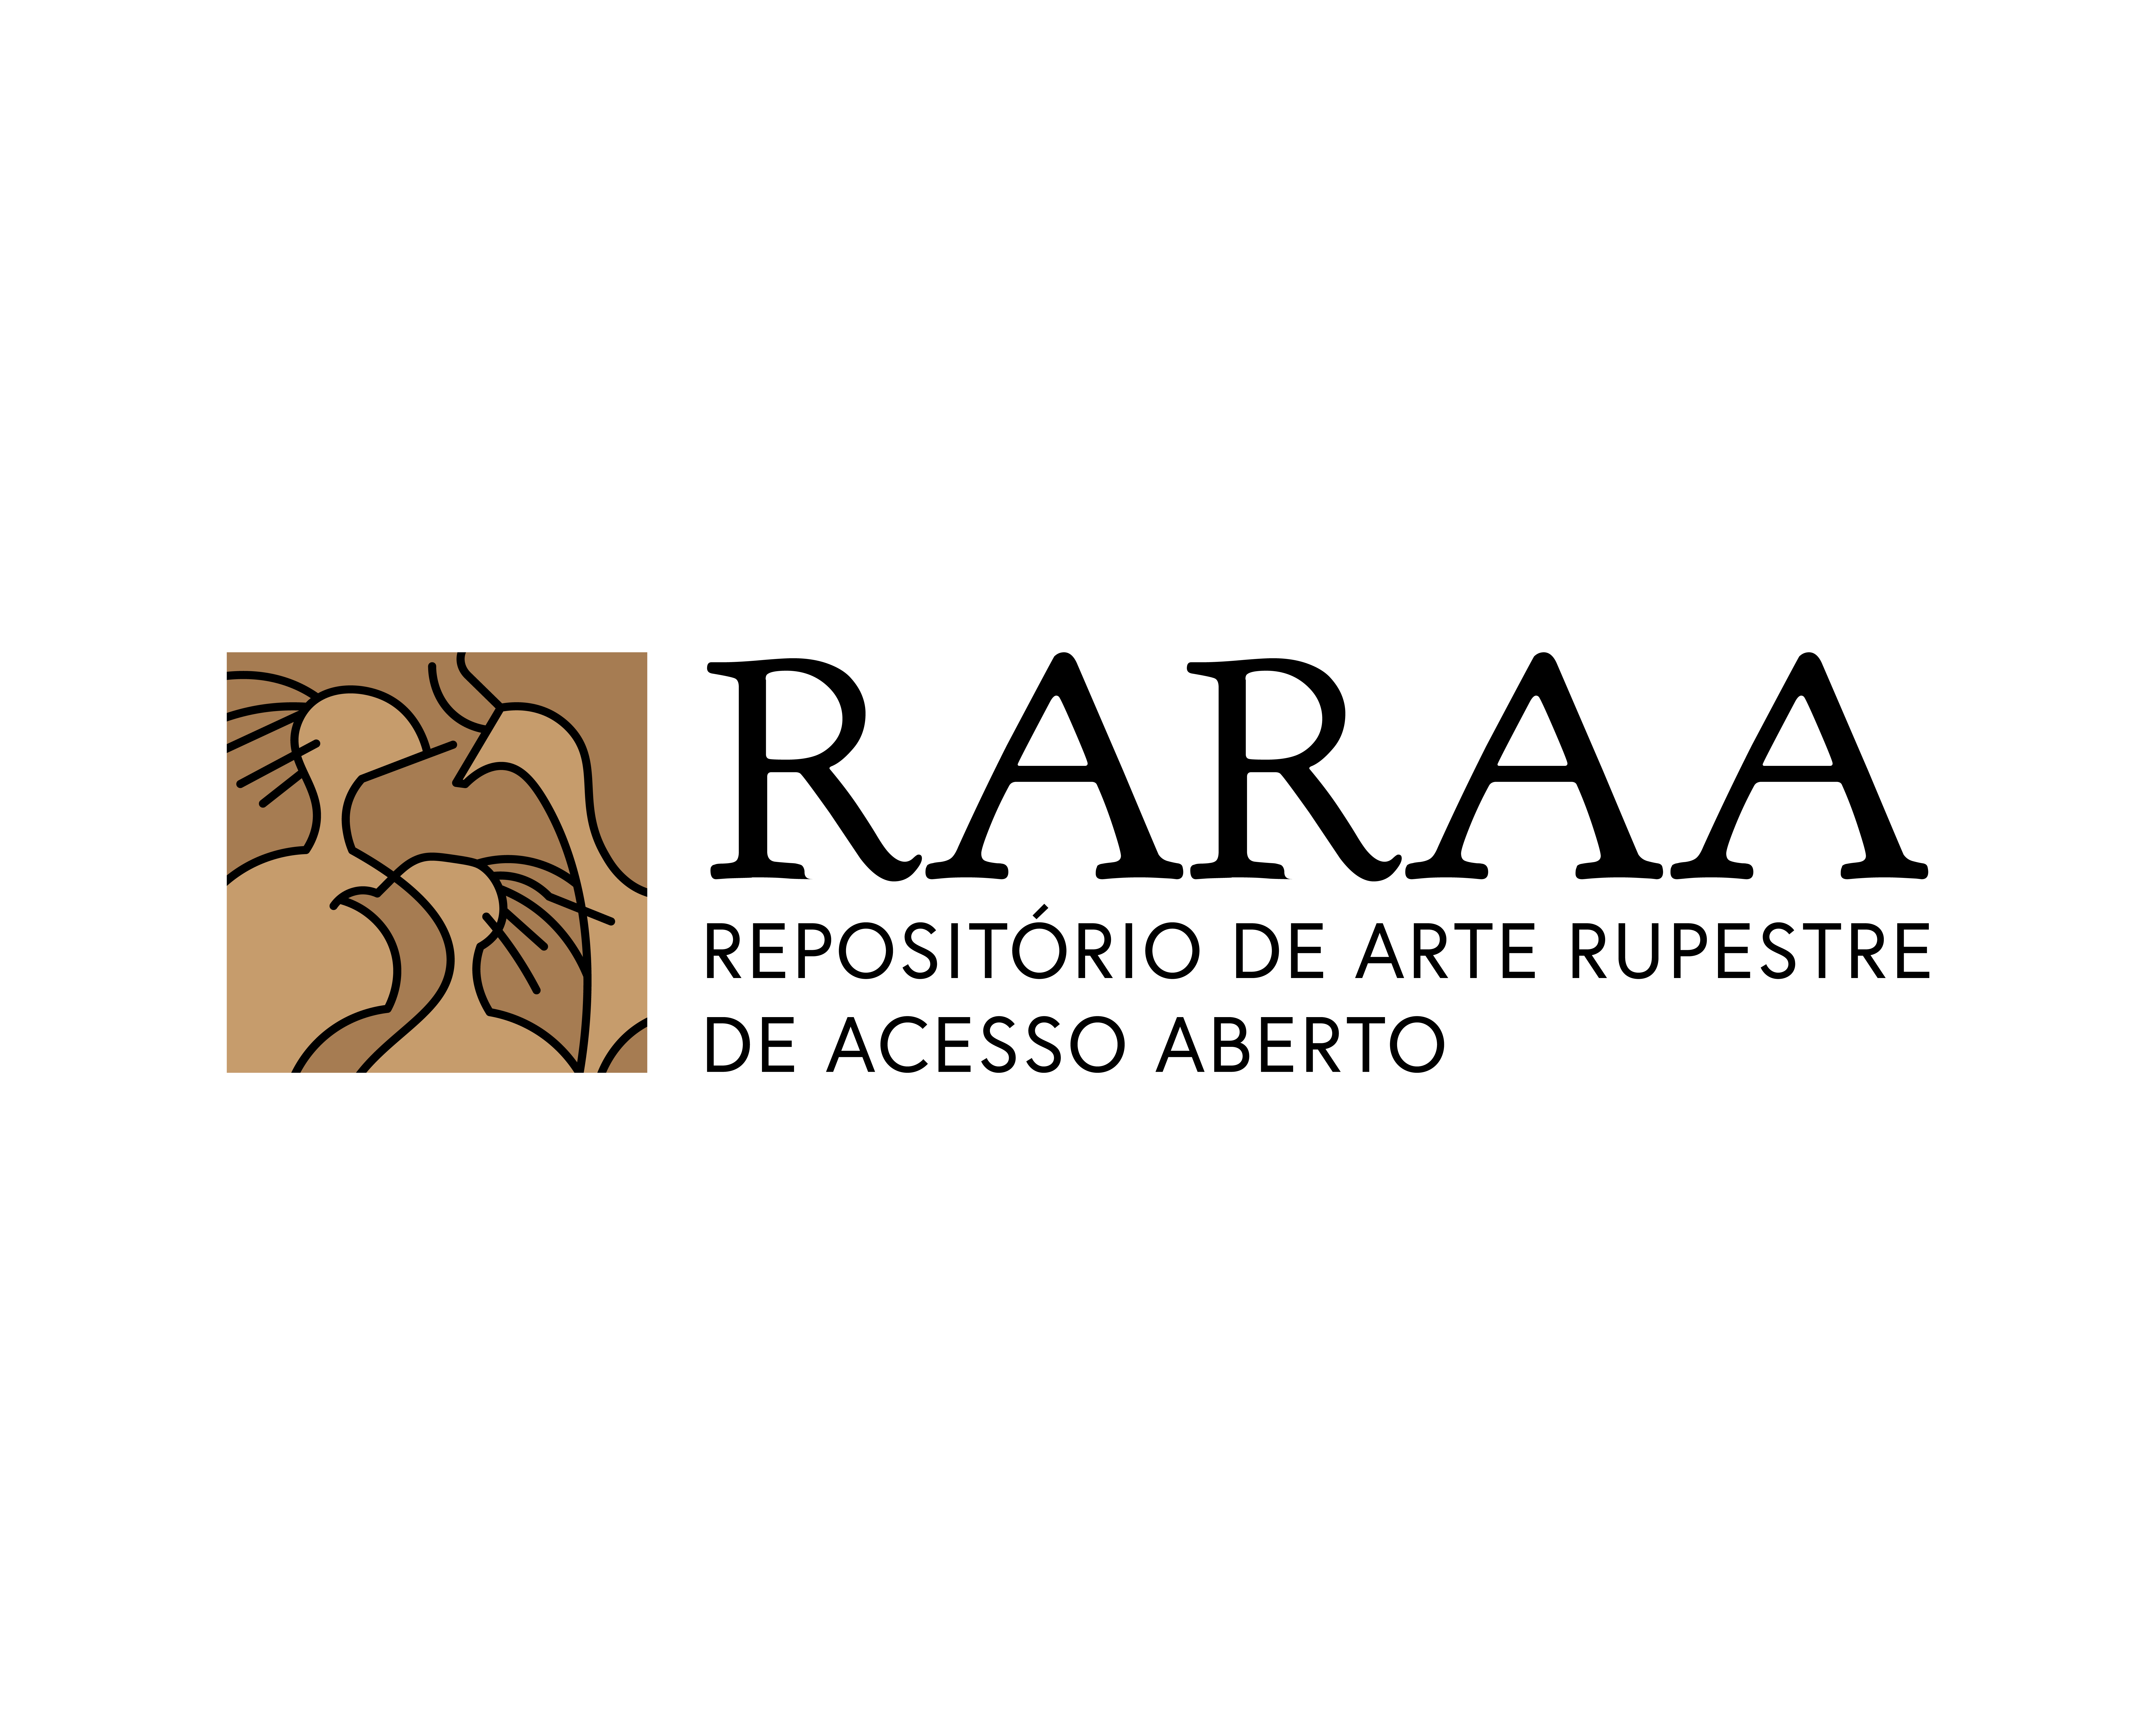 Tender for 1 (one) grant of Master Students within the scope of the R&D project “Repositório de Arte Rupestre de Acesso Aberto” (RARAA) image